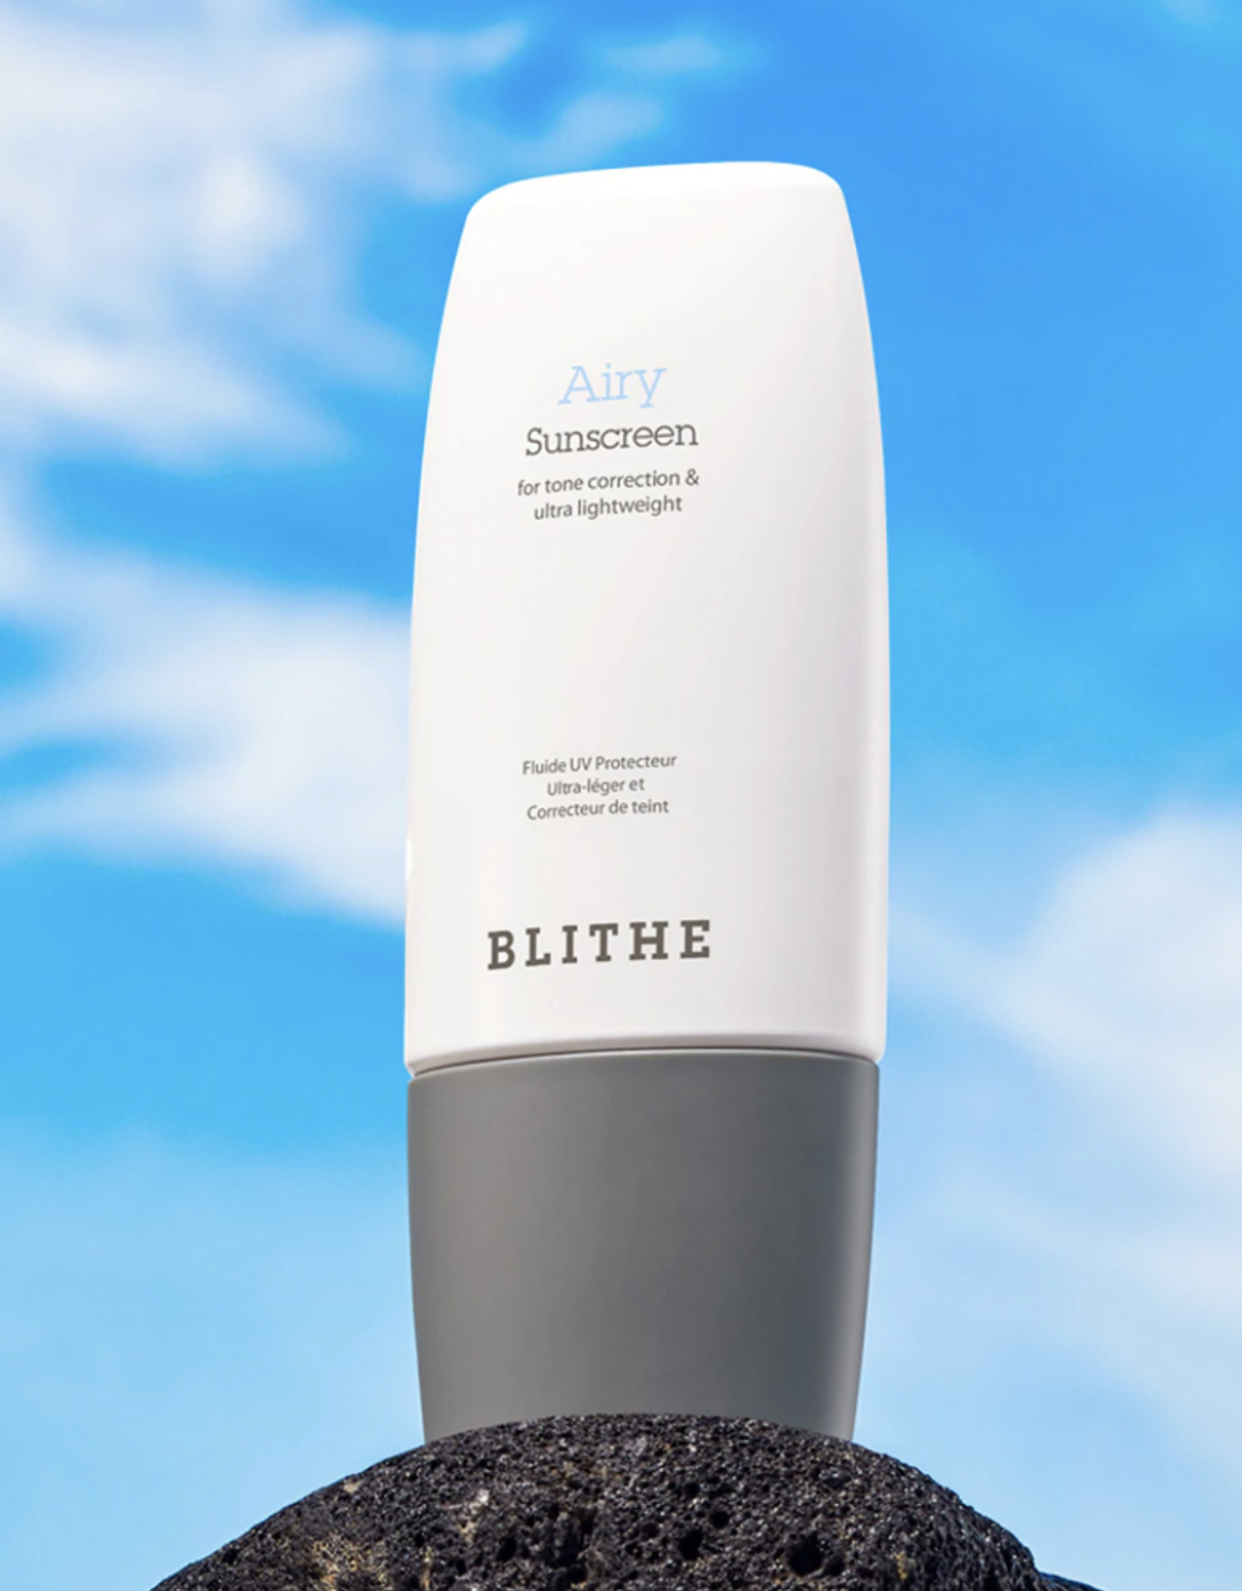 Blithe honest sunscreen. Blithe крем солнцезащитный - airy Sunscreen, 50мл. Blithe airy Sunscreen SPF 50+. [Blithe] солнцезащитный крем для лица airy Sunscreen, 50 мл. Солнцезащитный крем airy Sunscreen (50ml).